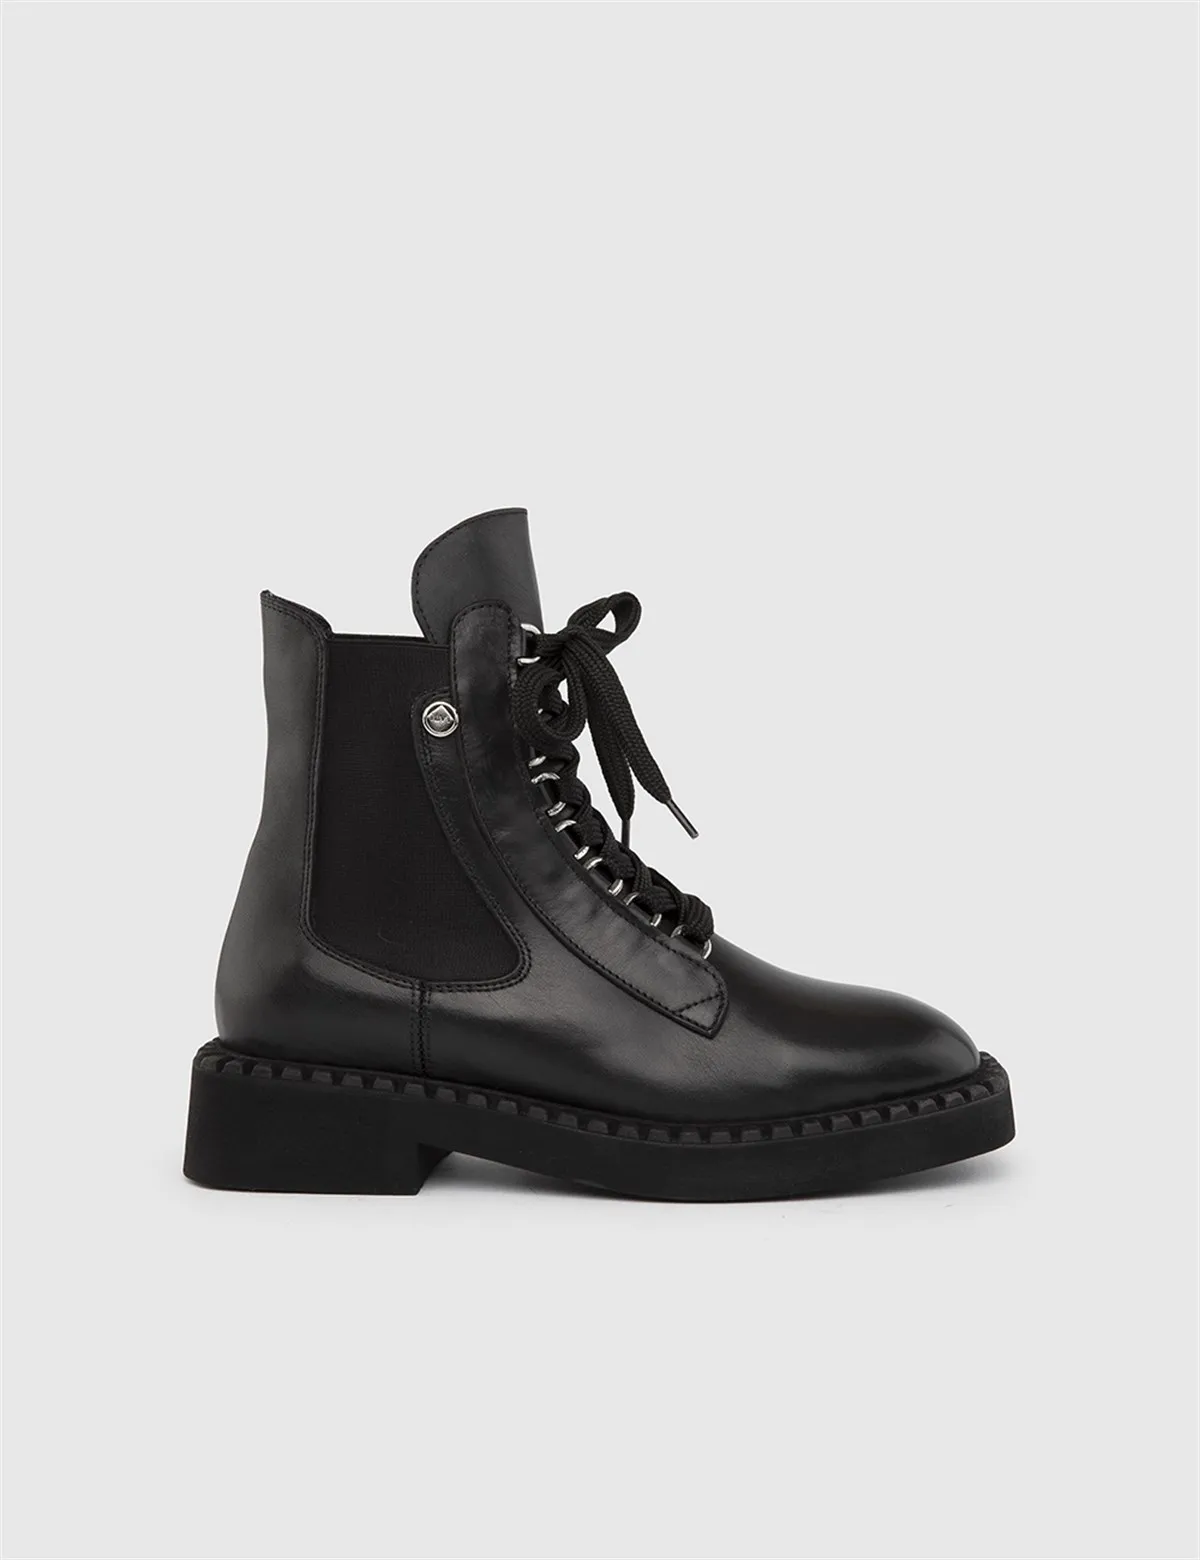 

ILVi-Genuine Leather Handmade Manon Black Leather Women's Boot Women's Shoes 2022 Fall/Winter